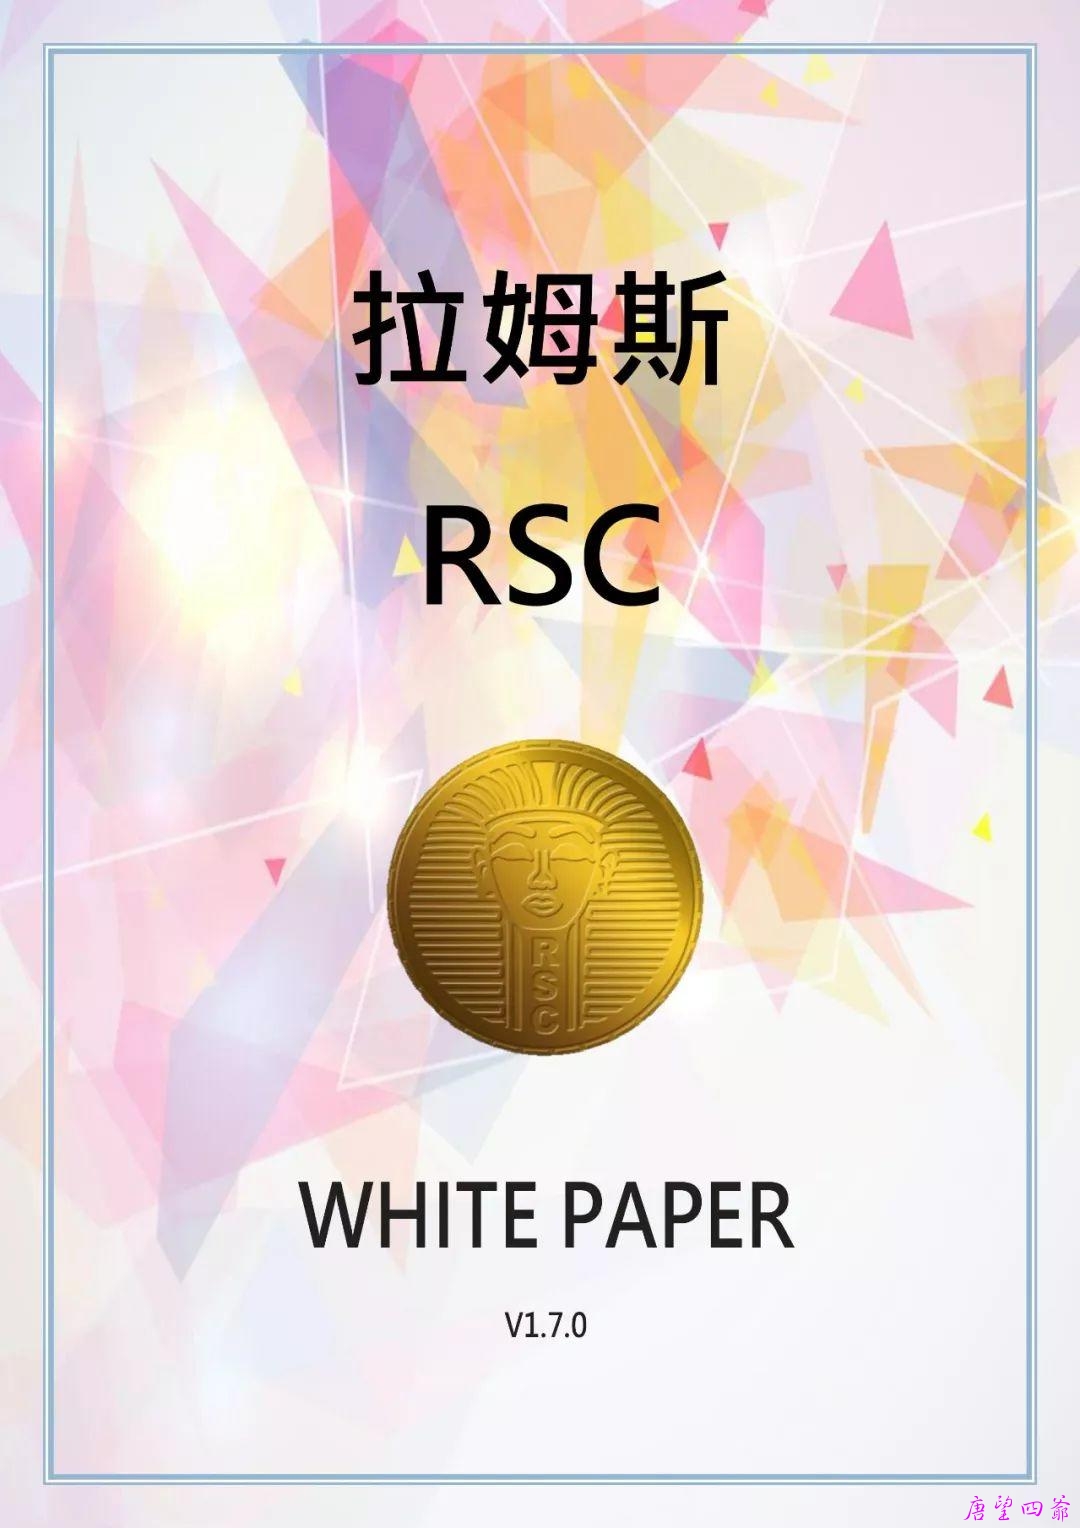 RSC Whitepaper拉姆斯币 (白皮书)